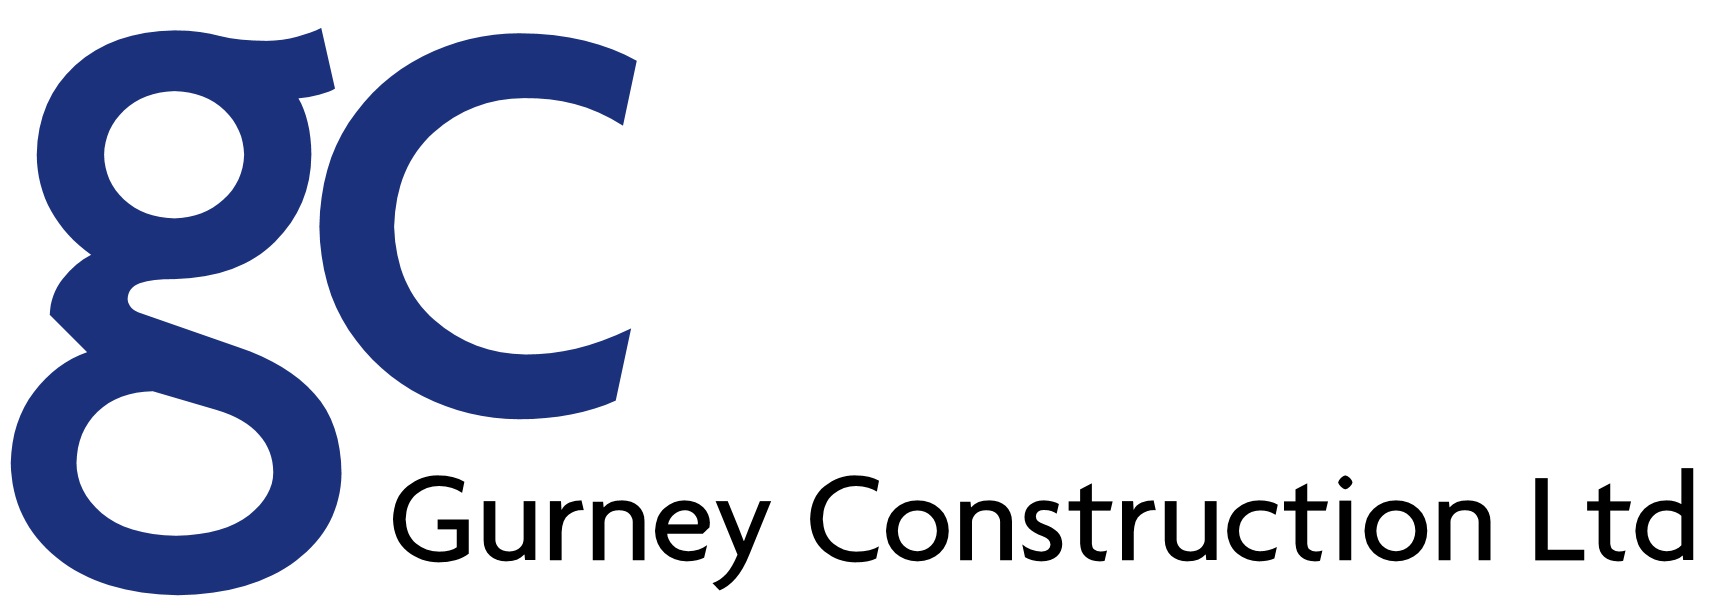 Gurney Construction Ltd